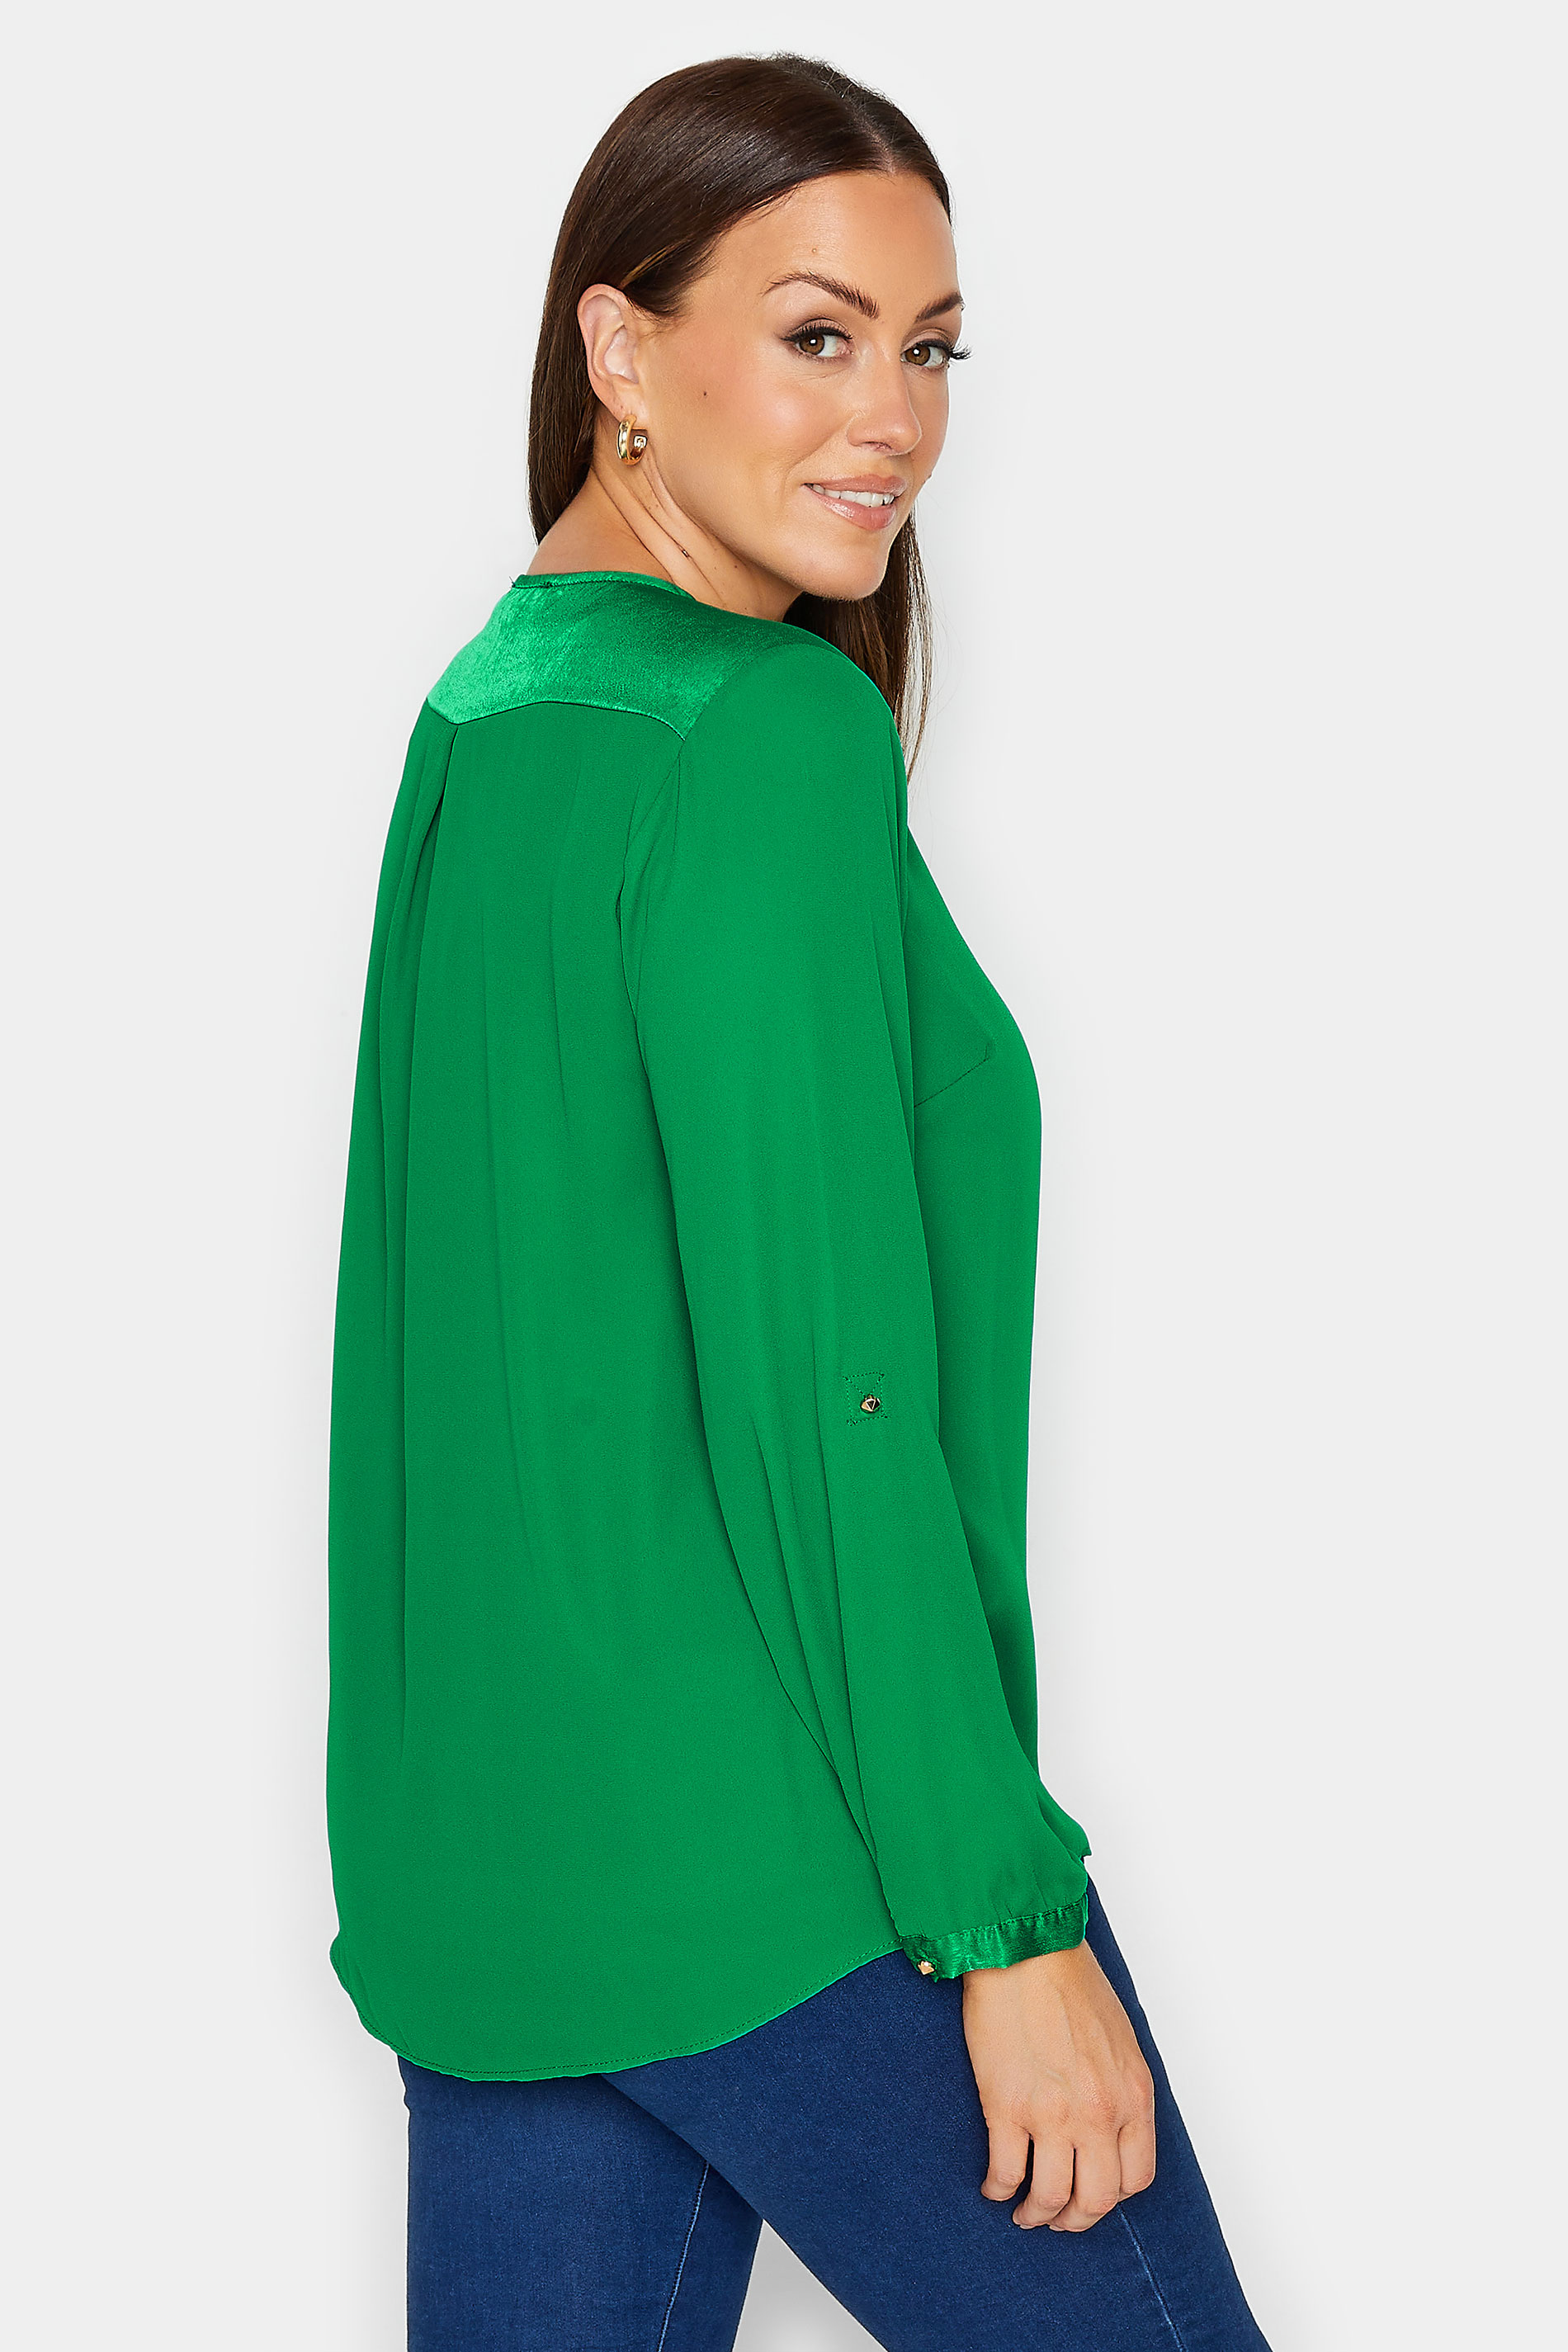 M&Co Green Satin Contrast Panel Shirt | M&Co 3